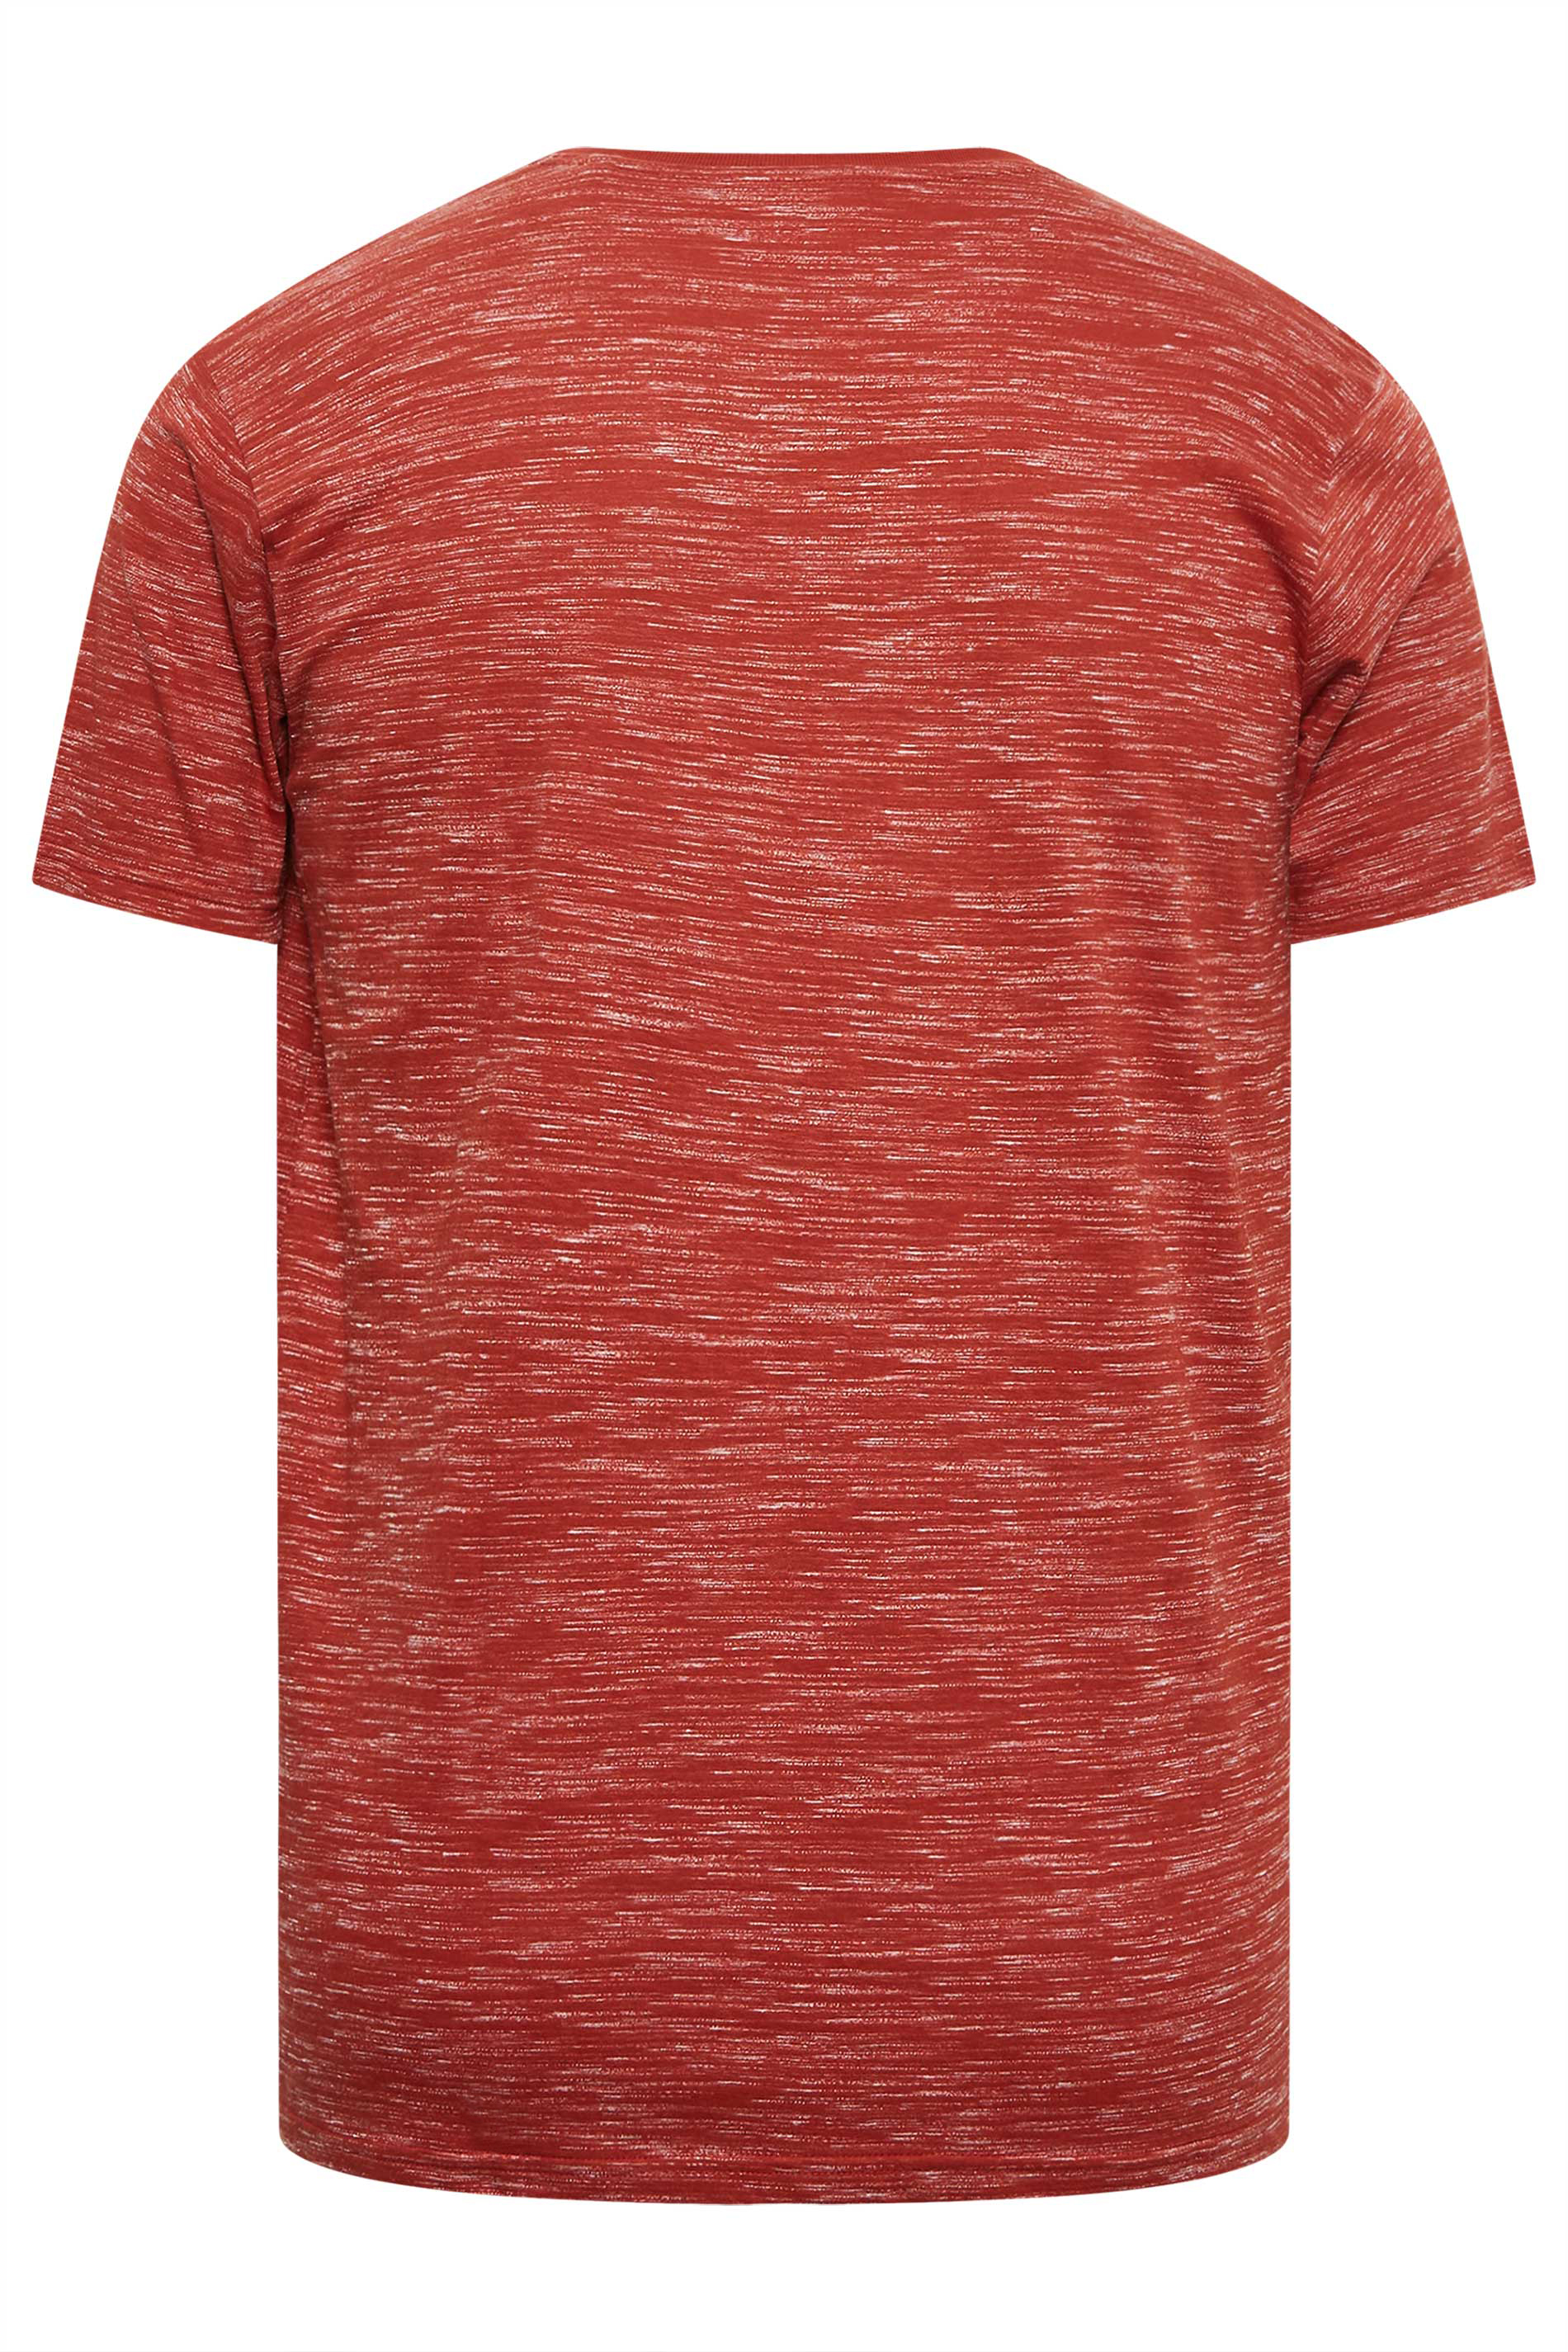 BadRhino Big & Tall Red Injected Slub T-Shirt | BadRhino 3